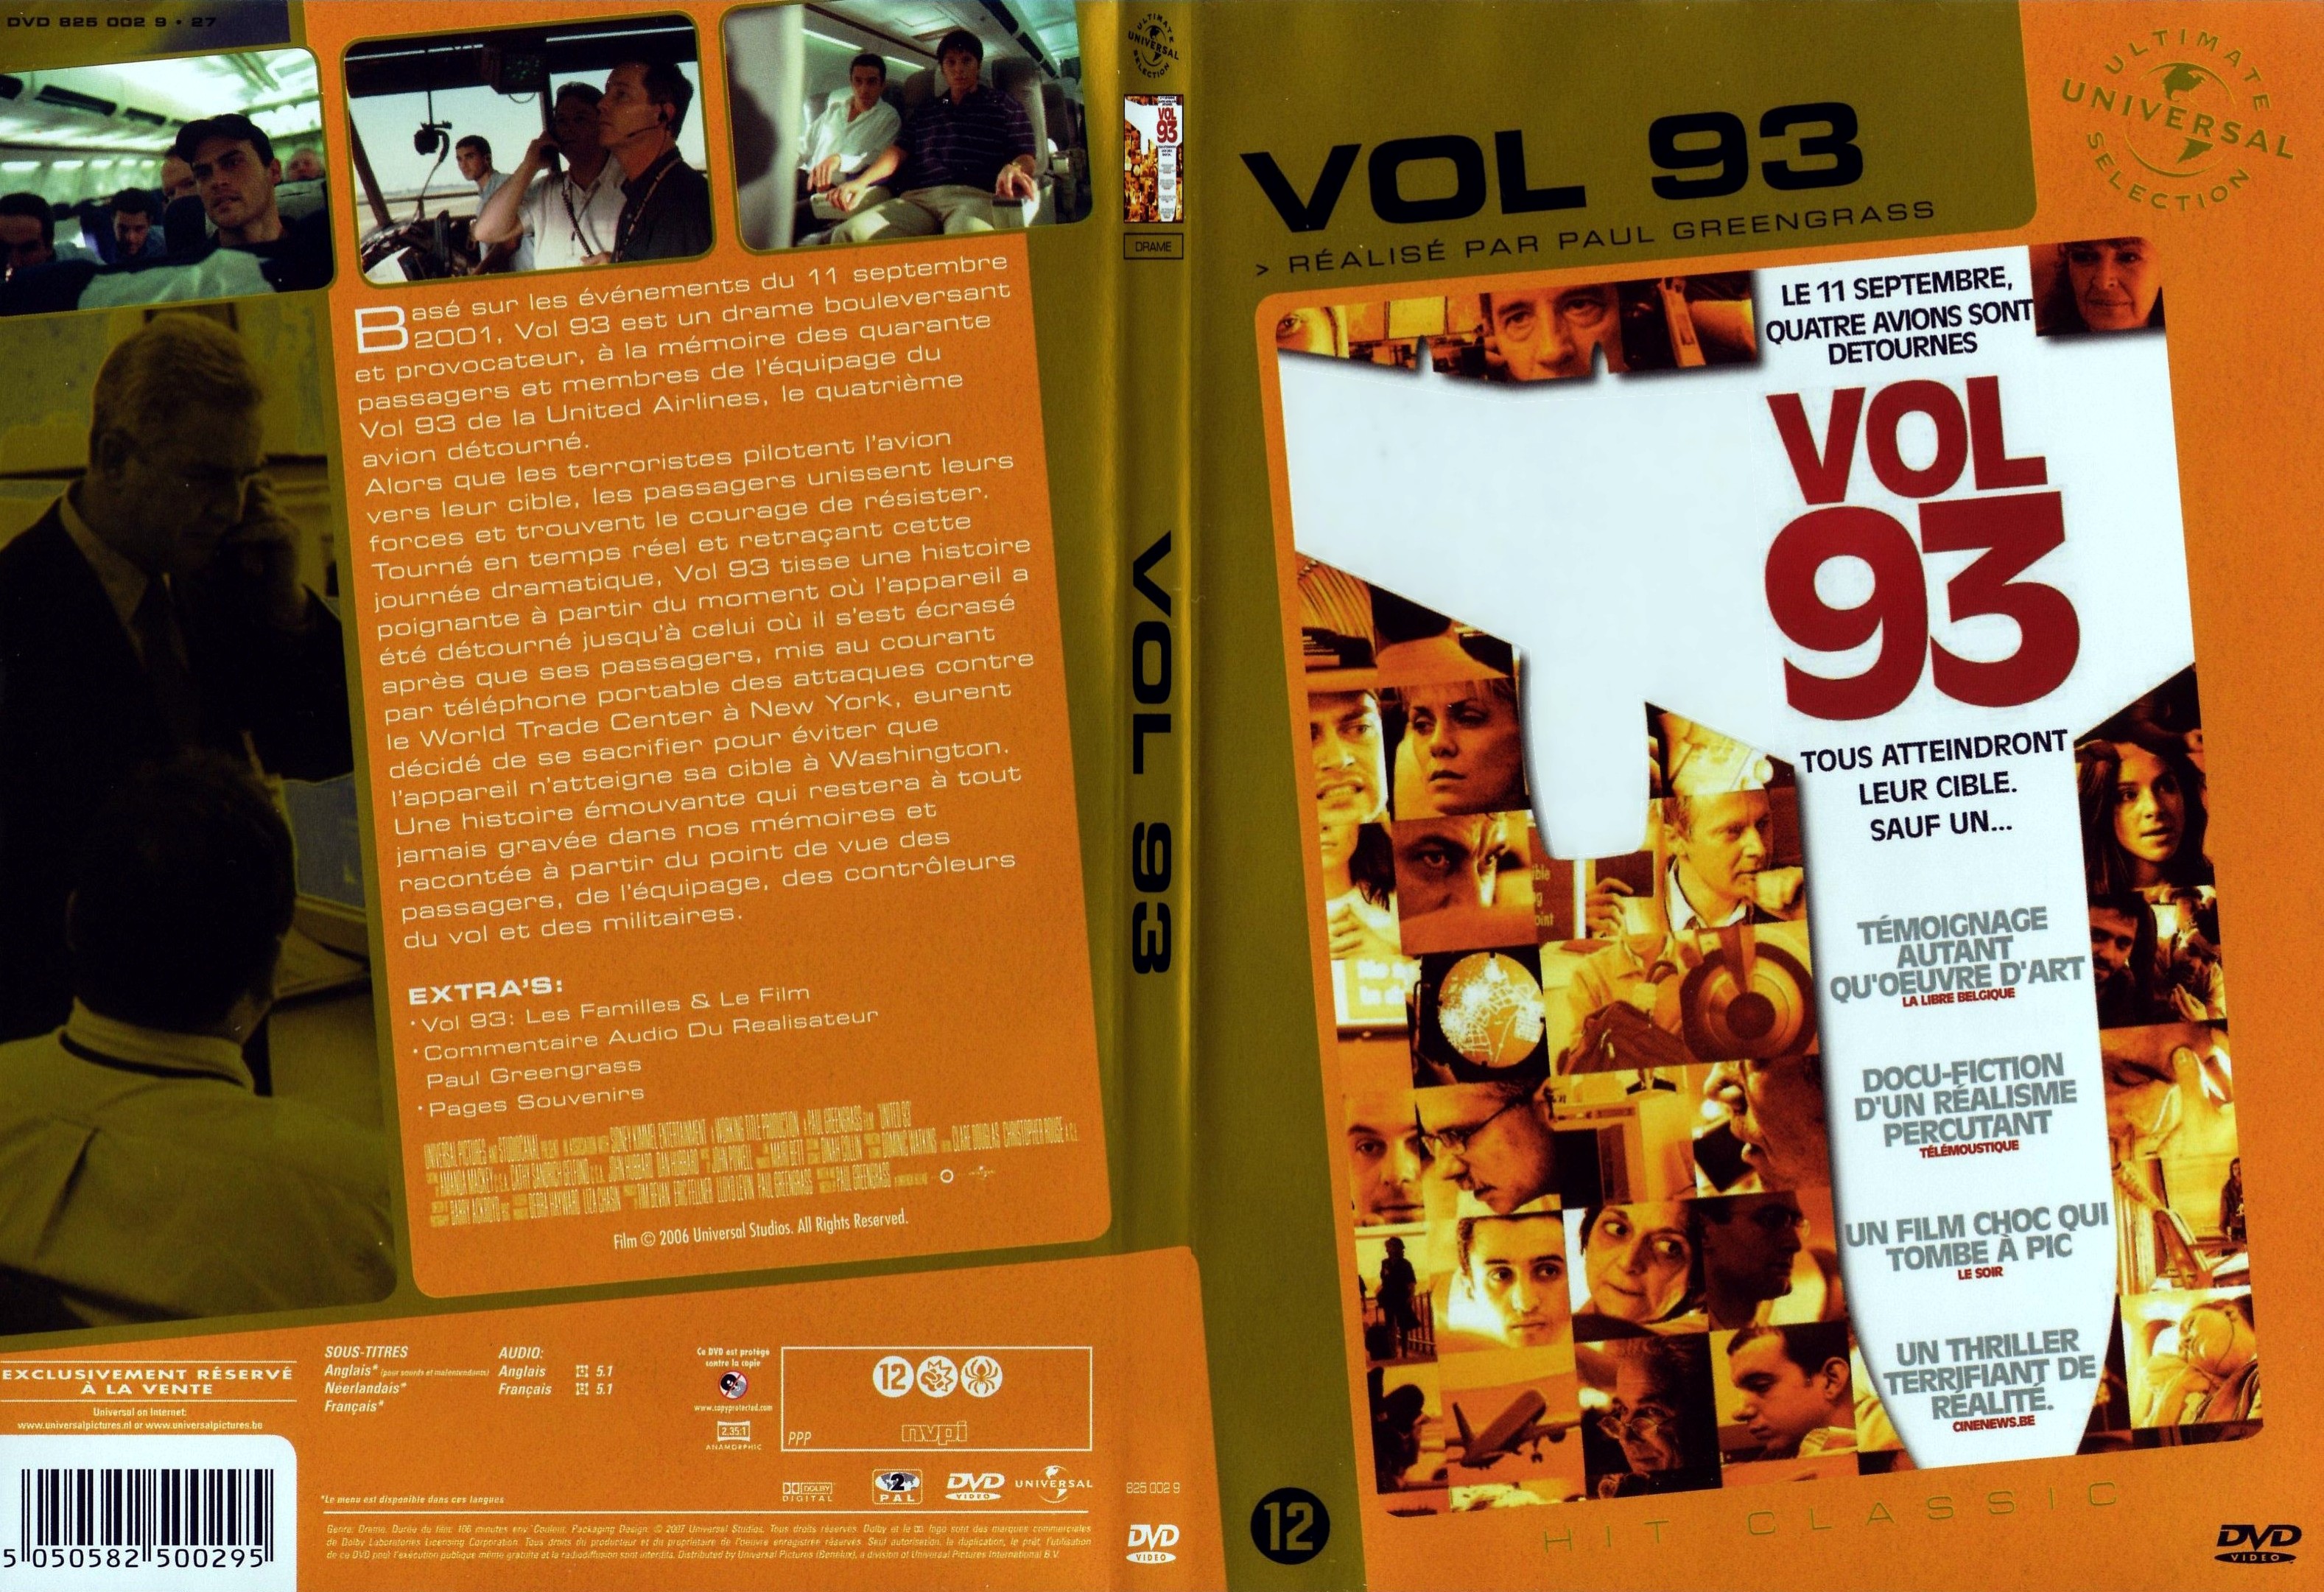 Jaquette DVD Vol 93 - SLIM